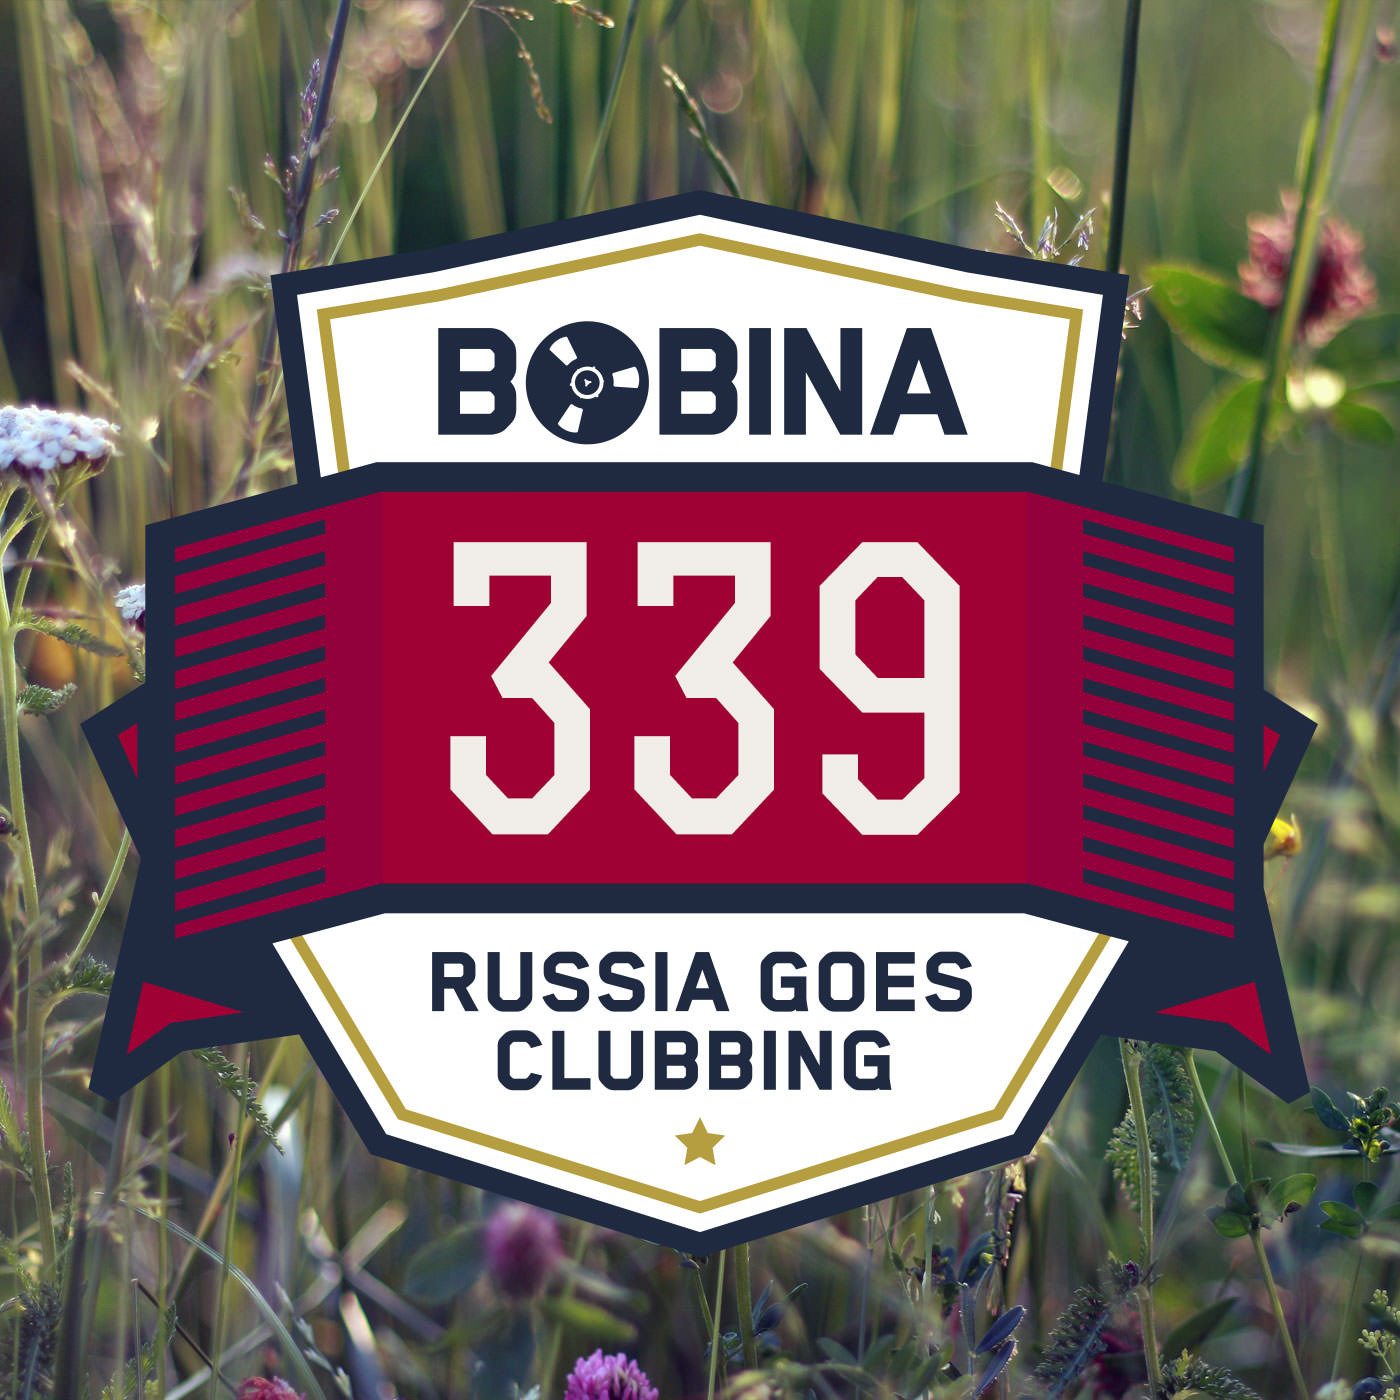 Nr. 339 Russia Goes Clubbing